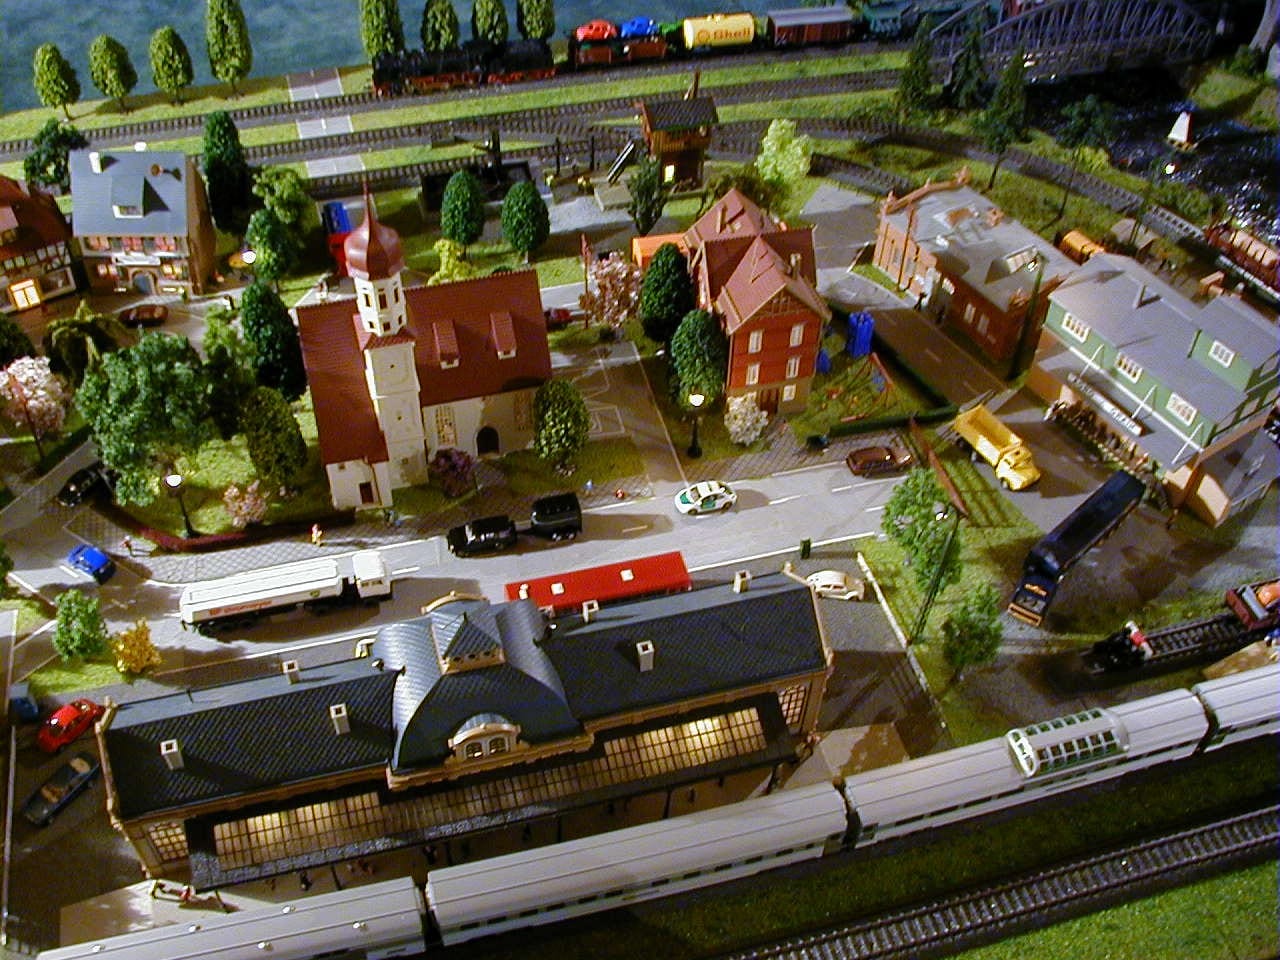 scale track layout plans marklin ho scale track plans ho train yard